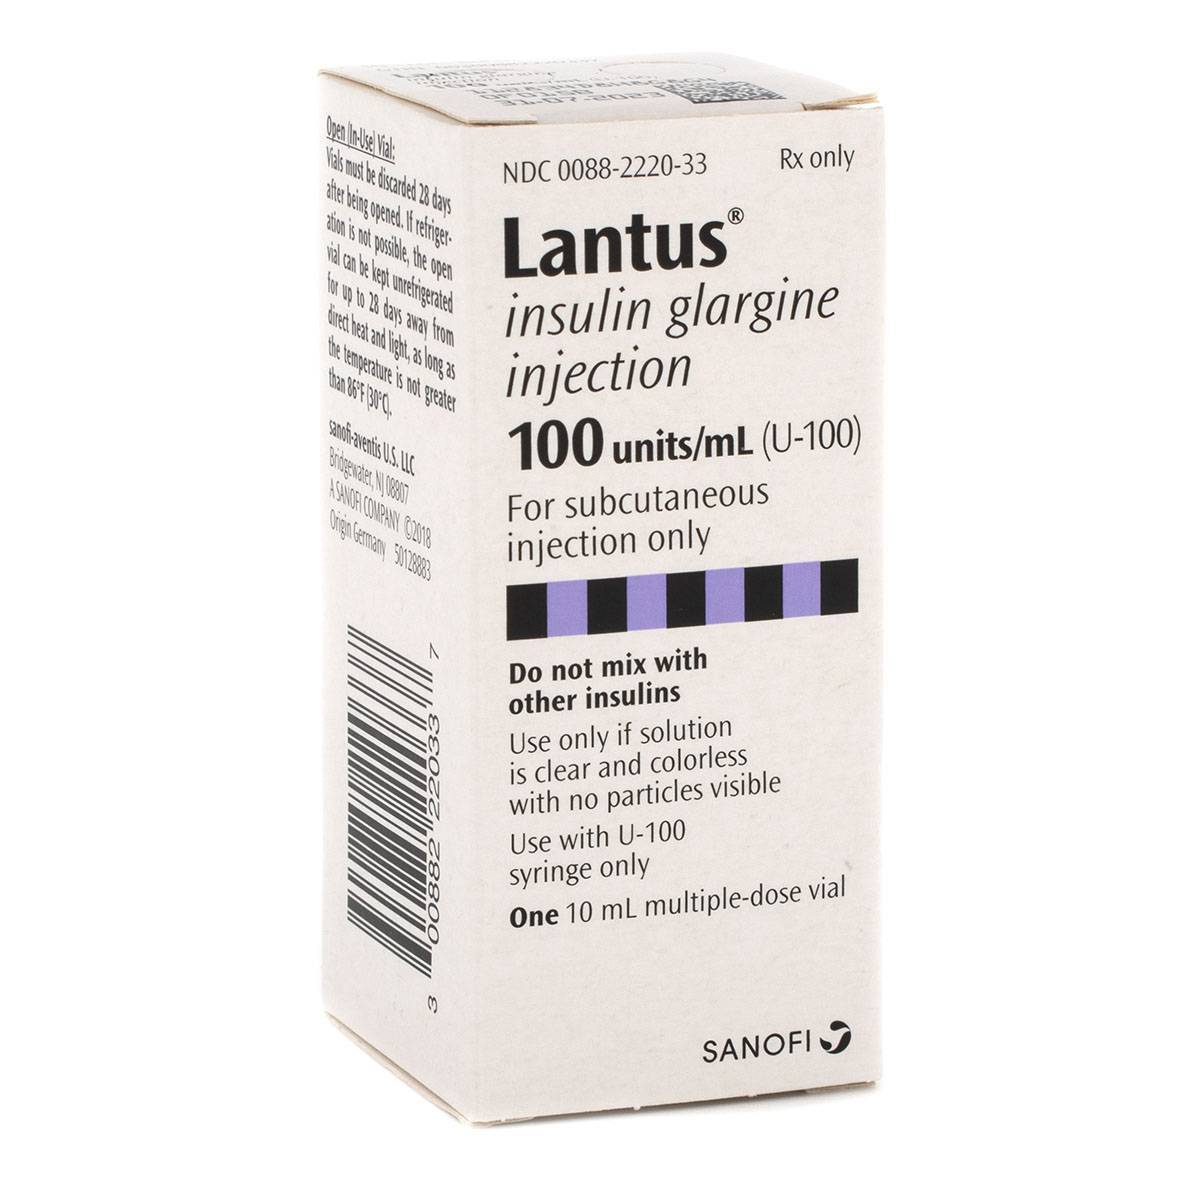 lantus-insulin-for-cats-feline-diabetes-vetrxdirect